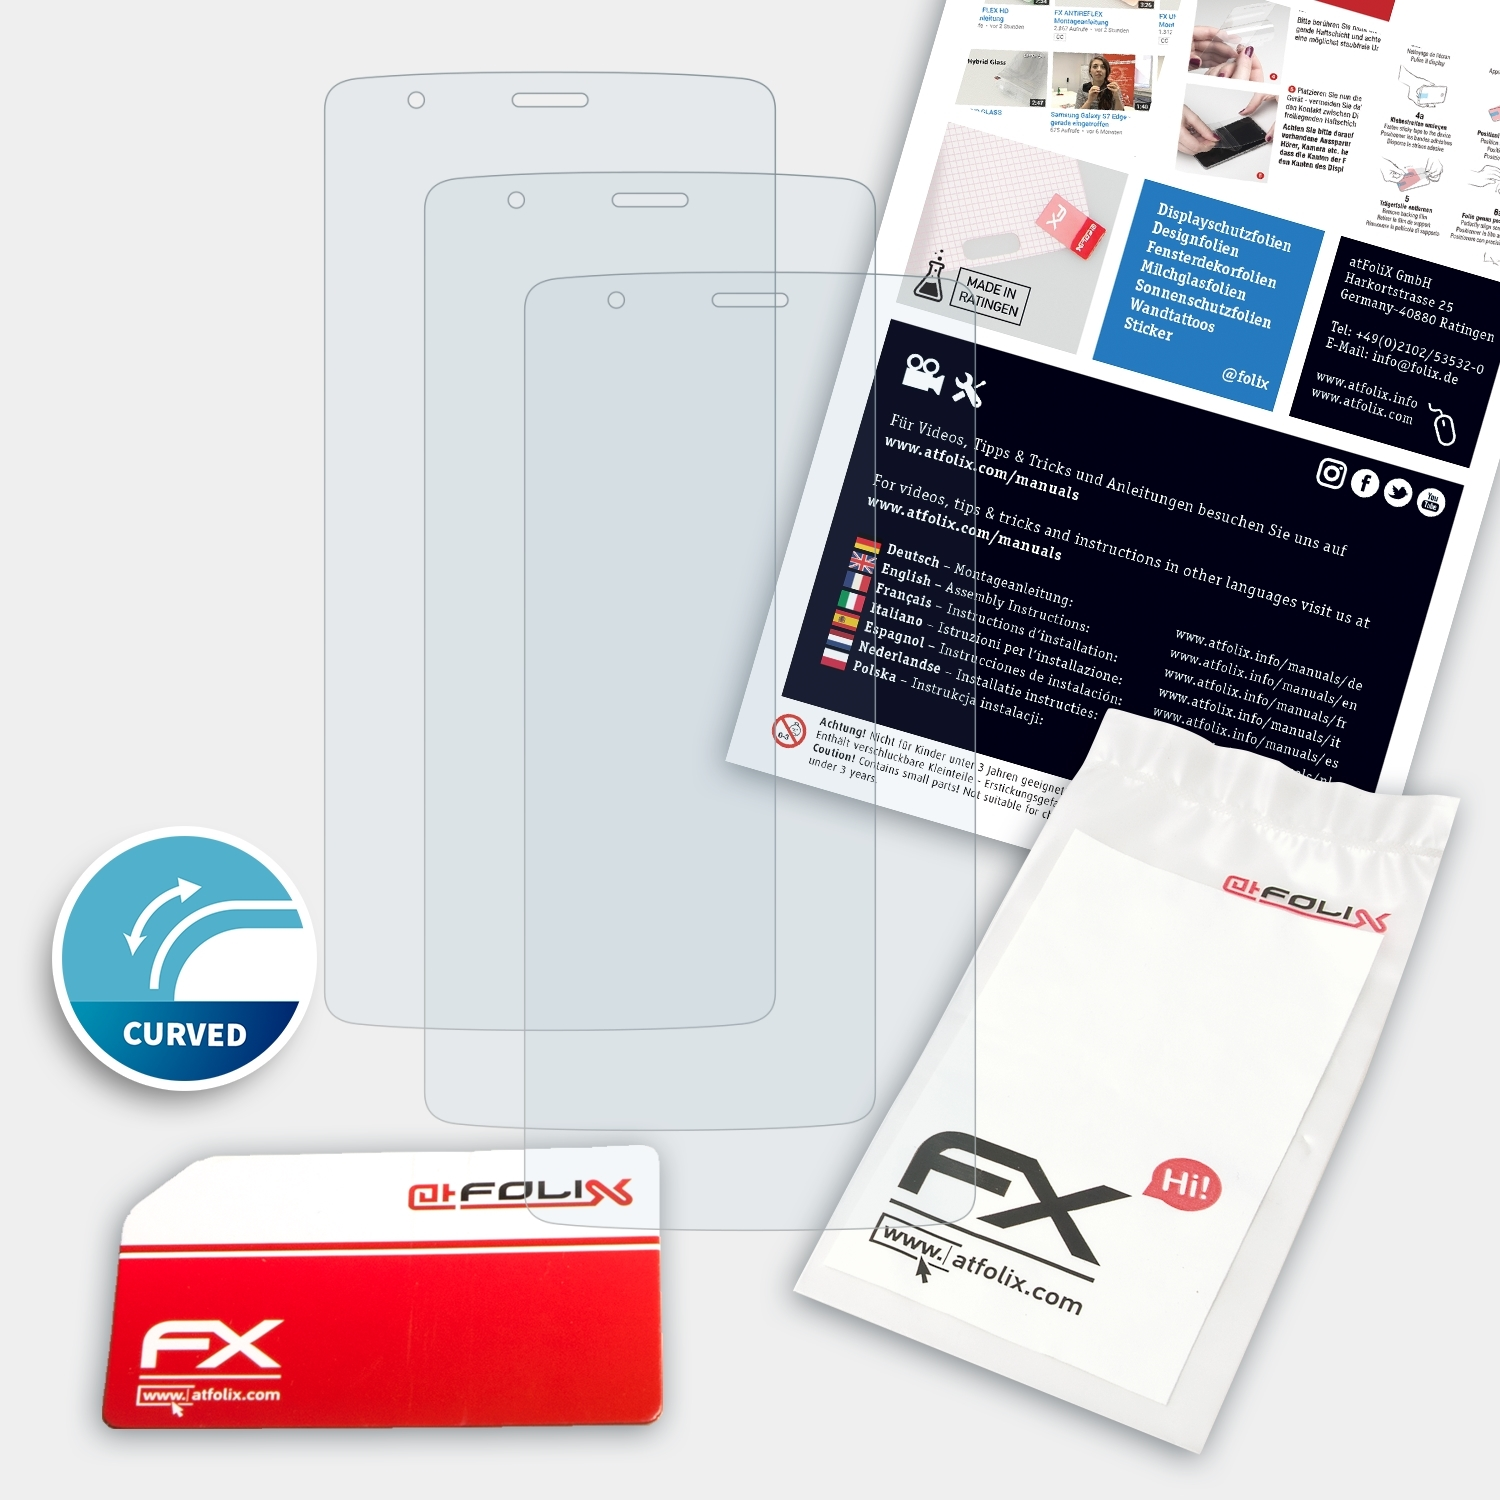 ATFOLIX 3x FX-ActiFleX Displayschutz(für Blackview Pro) A20